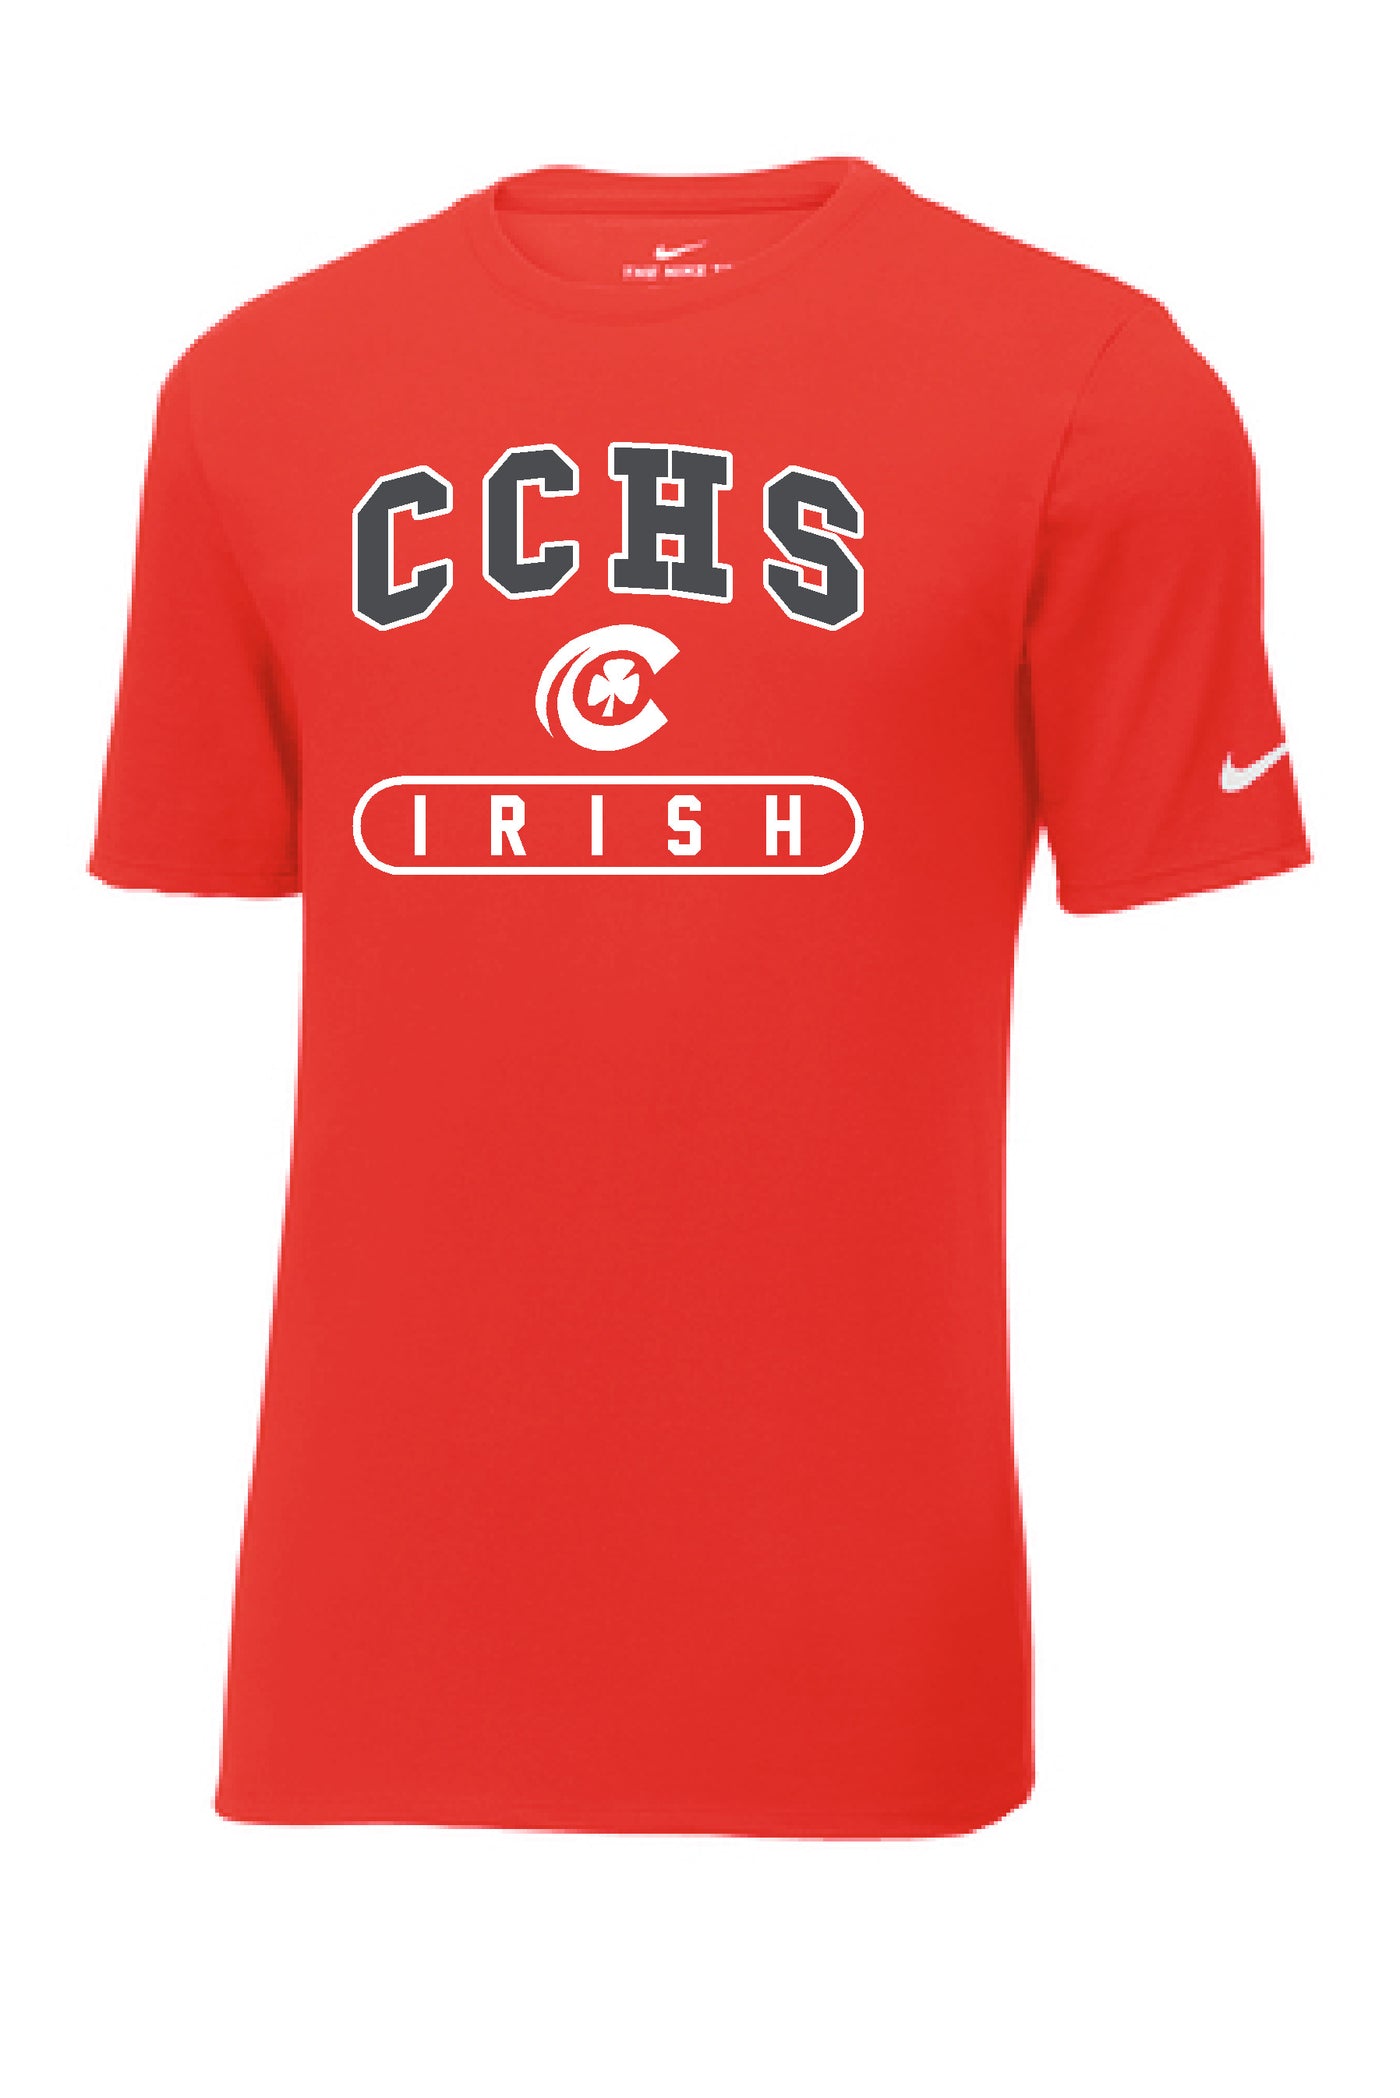 CCHS Nike Core Cotton Tee